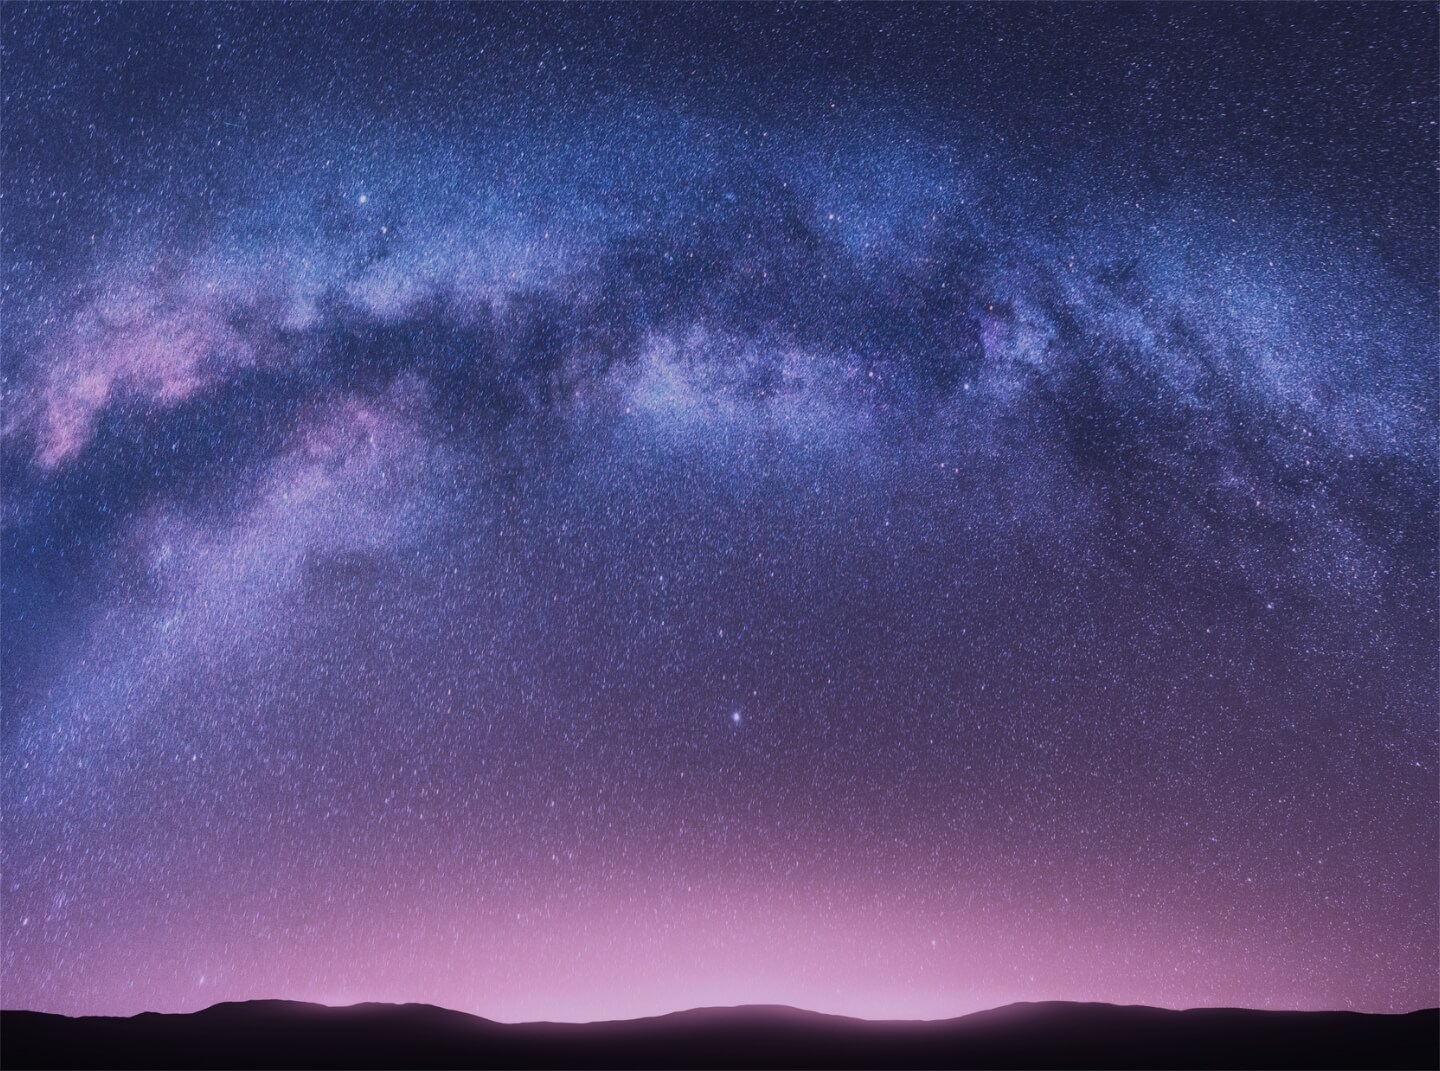 Nighttime photo of the Milky Way visible over a mountainous horizon